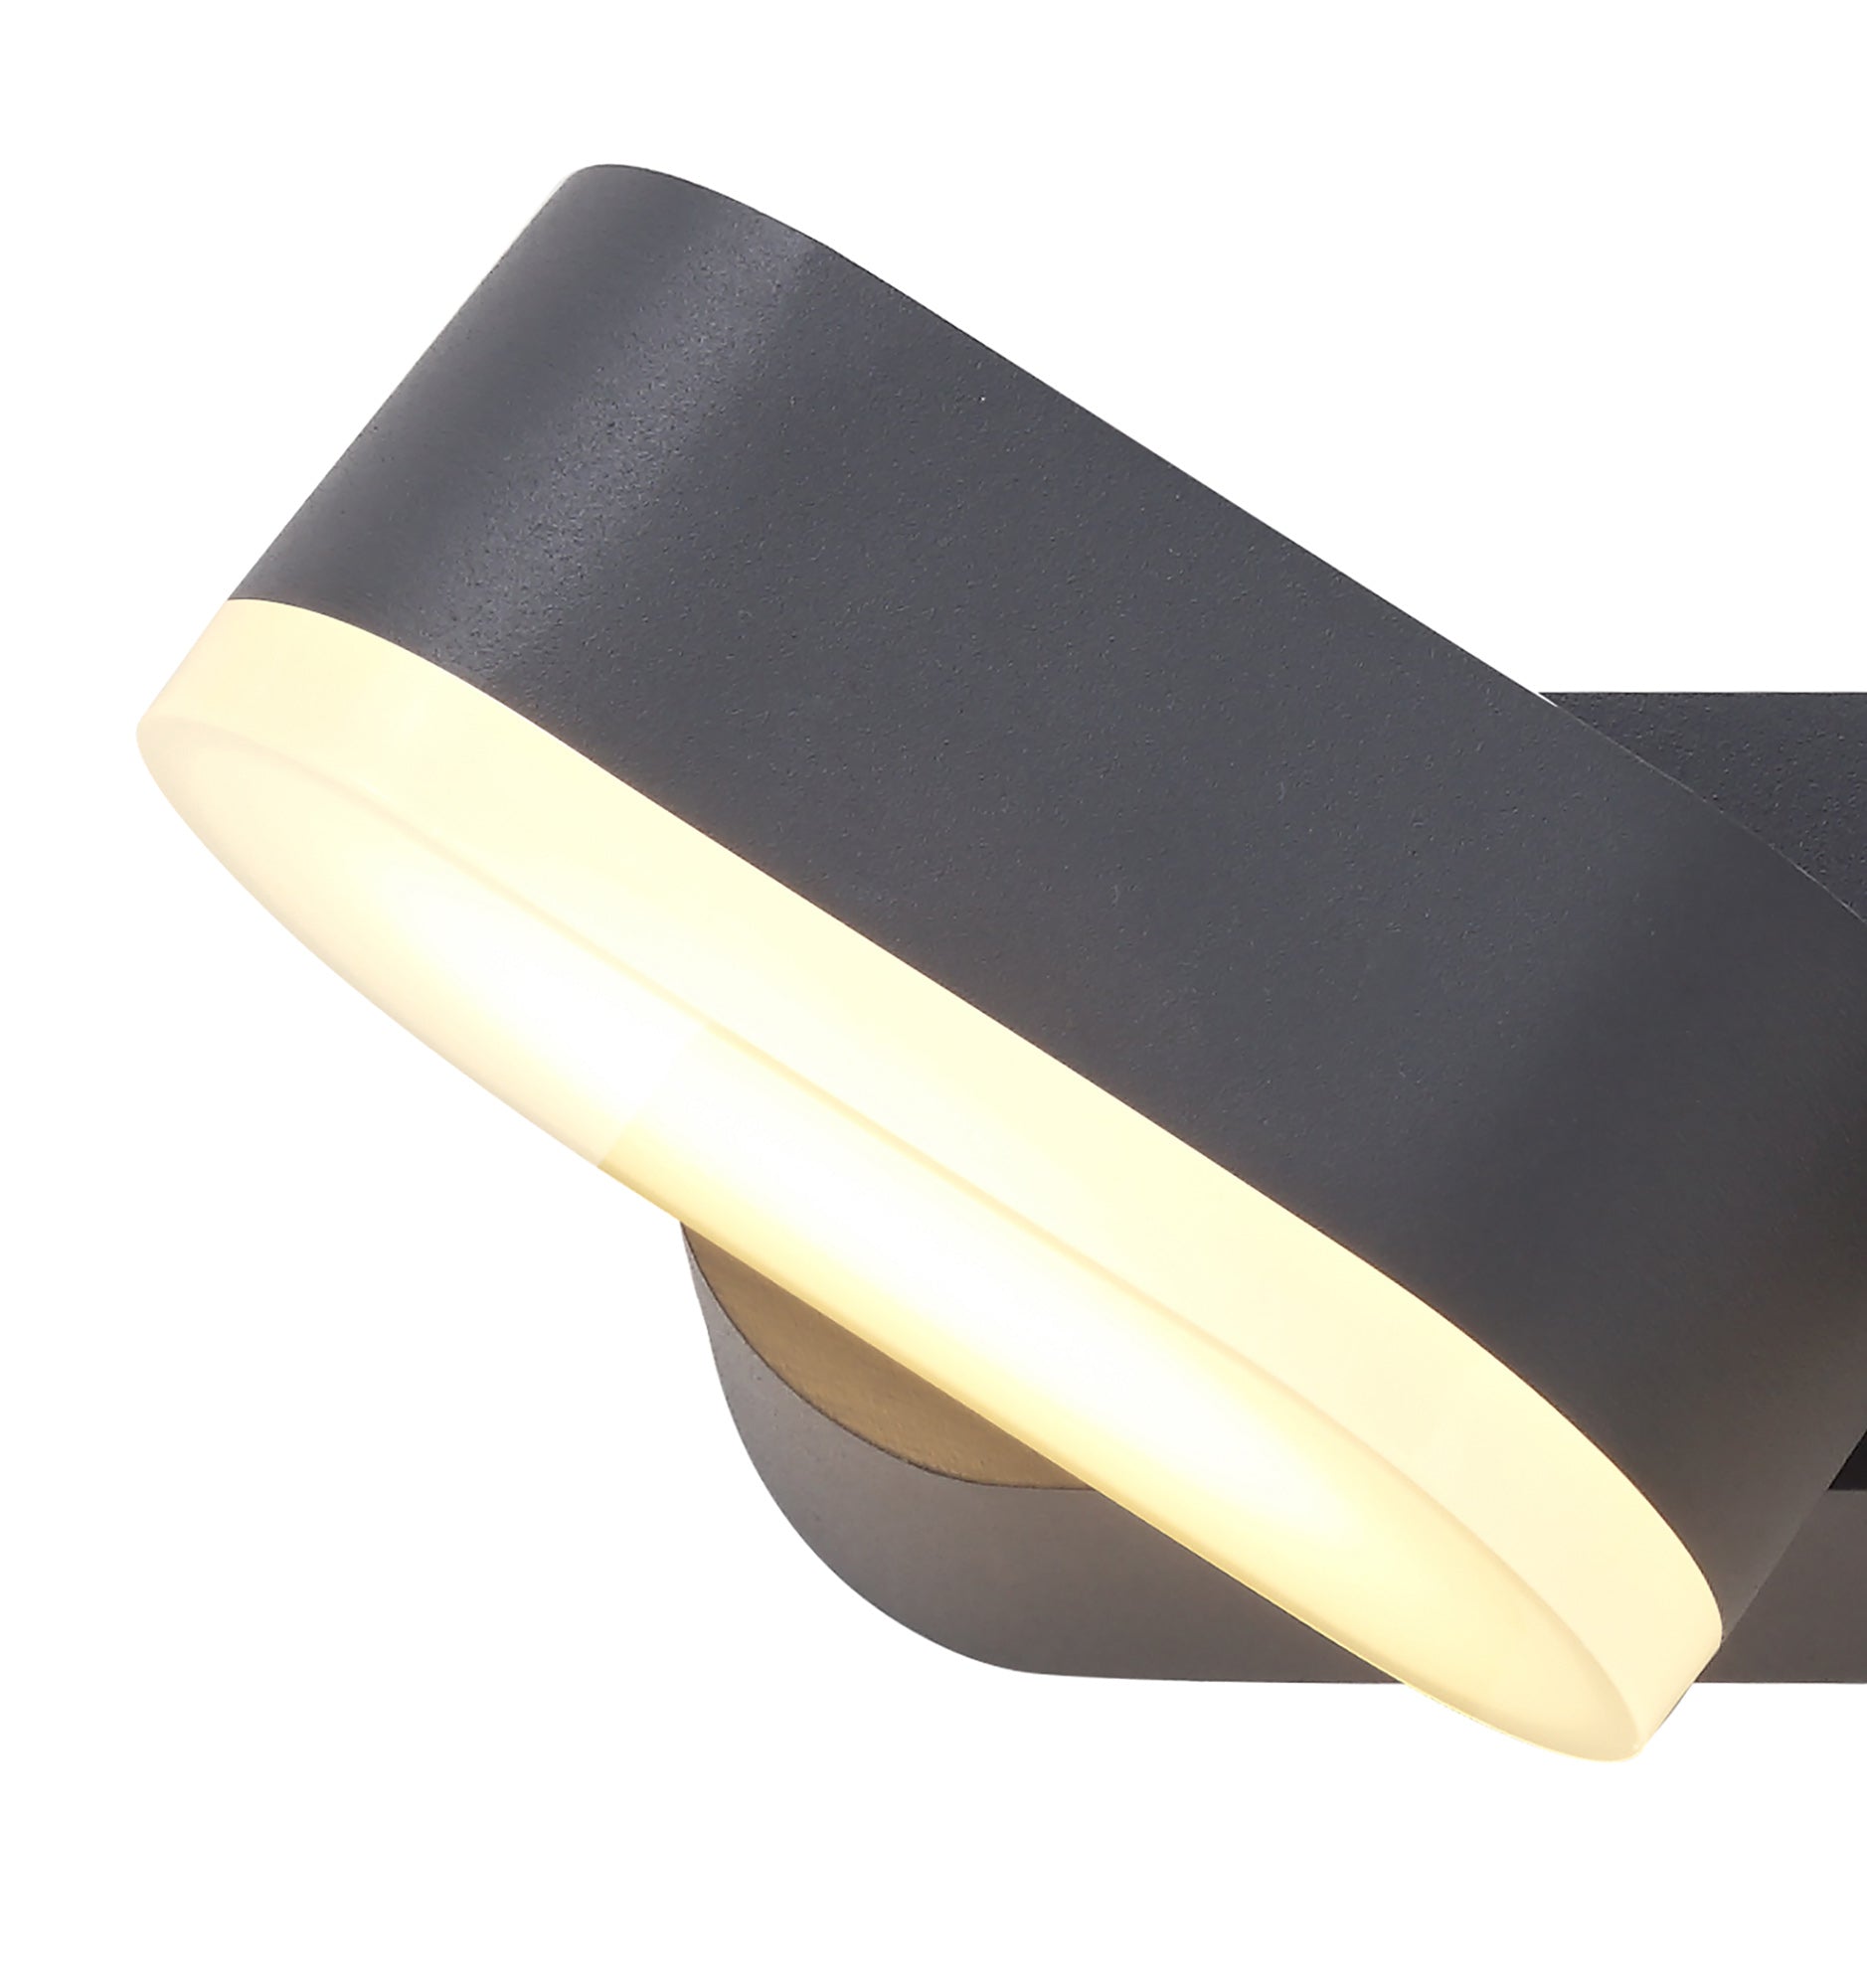 Mata 2 Light Adjustable Wall Lamp, 2 x 6W LED, 3000K, 780lm, IP54, Anthracite, 3yrs Warranty